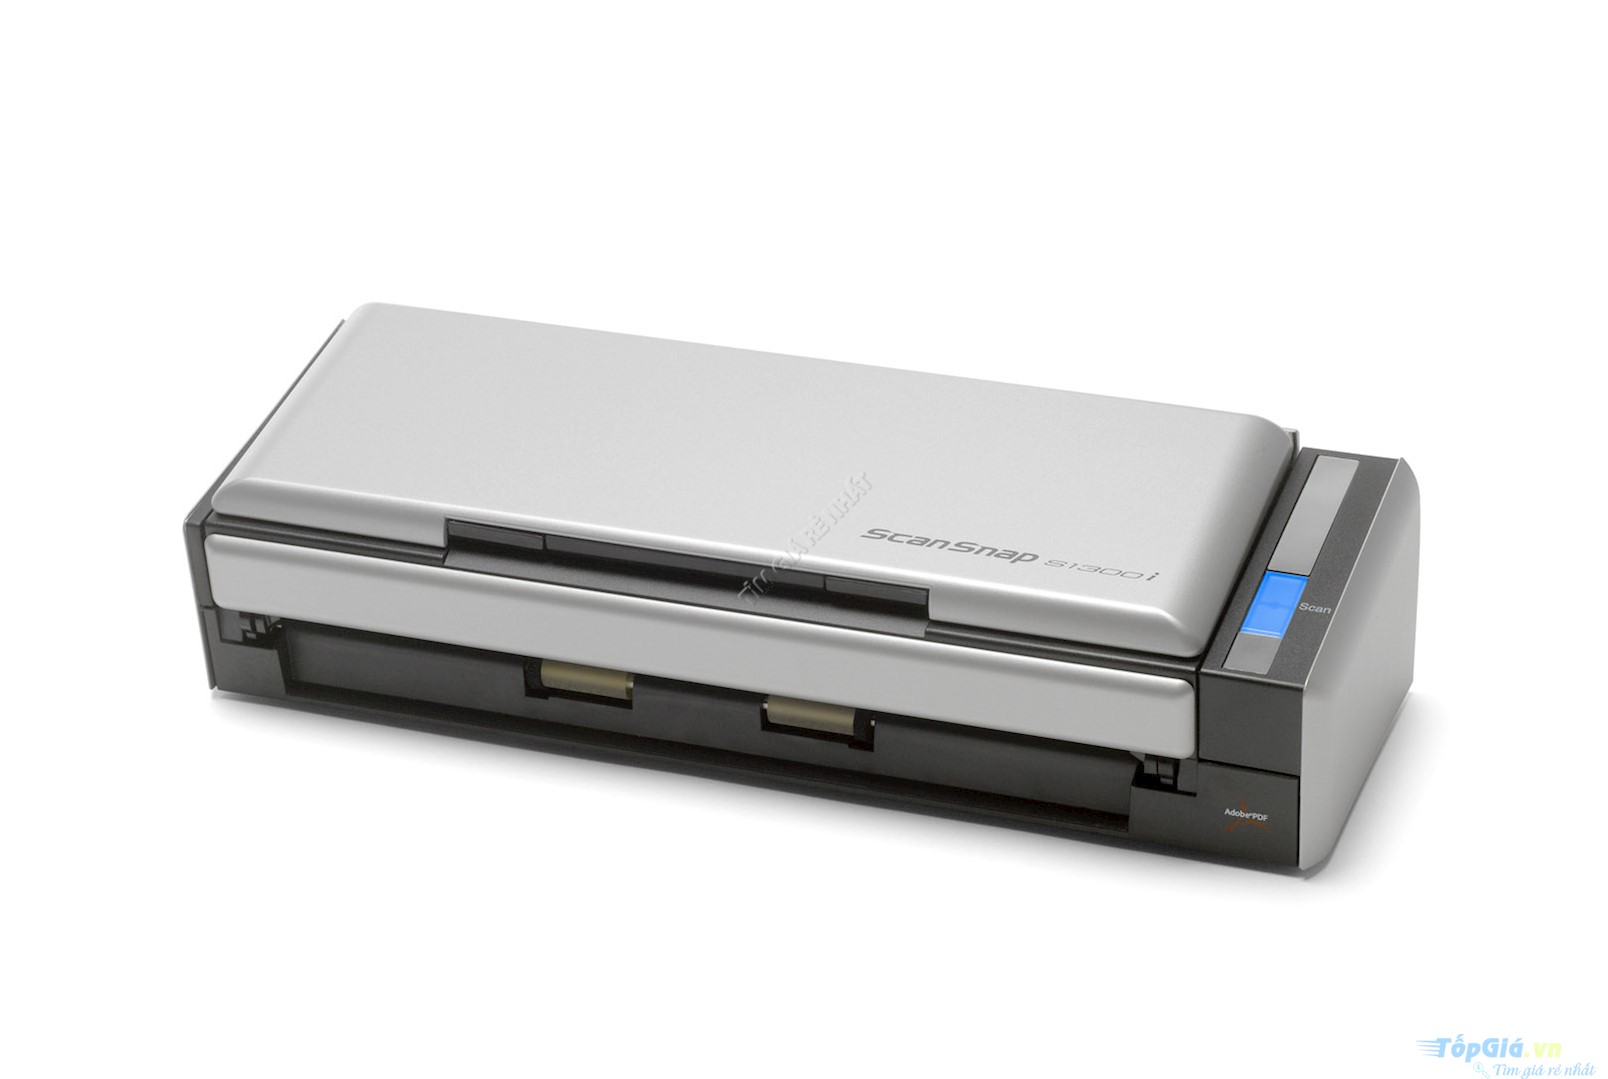 Sửa máy scan Fujitsu ScanSnap S1300i Rack2Filer